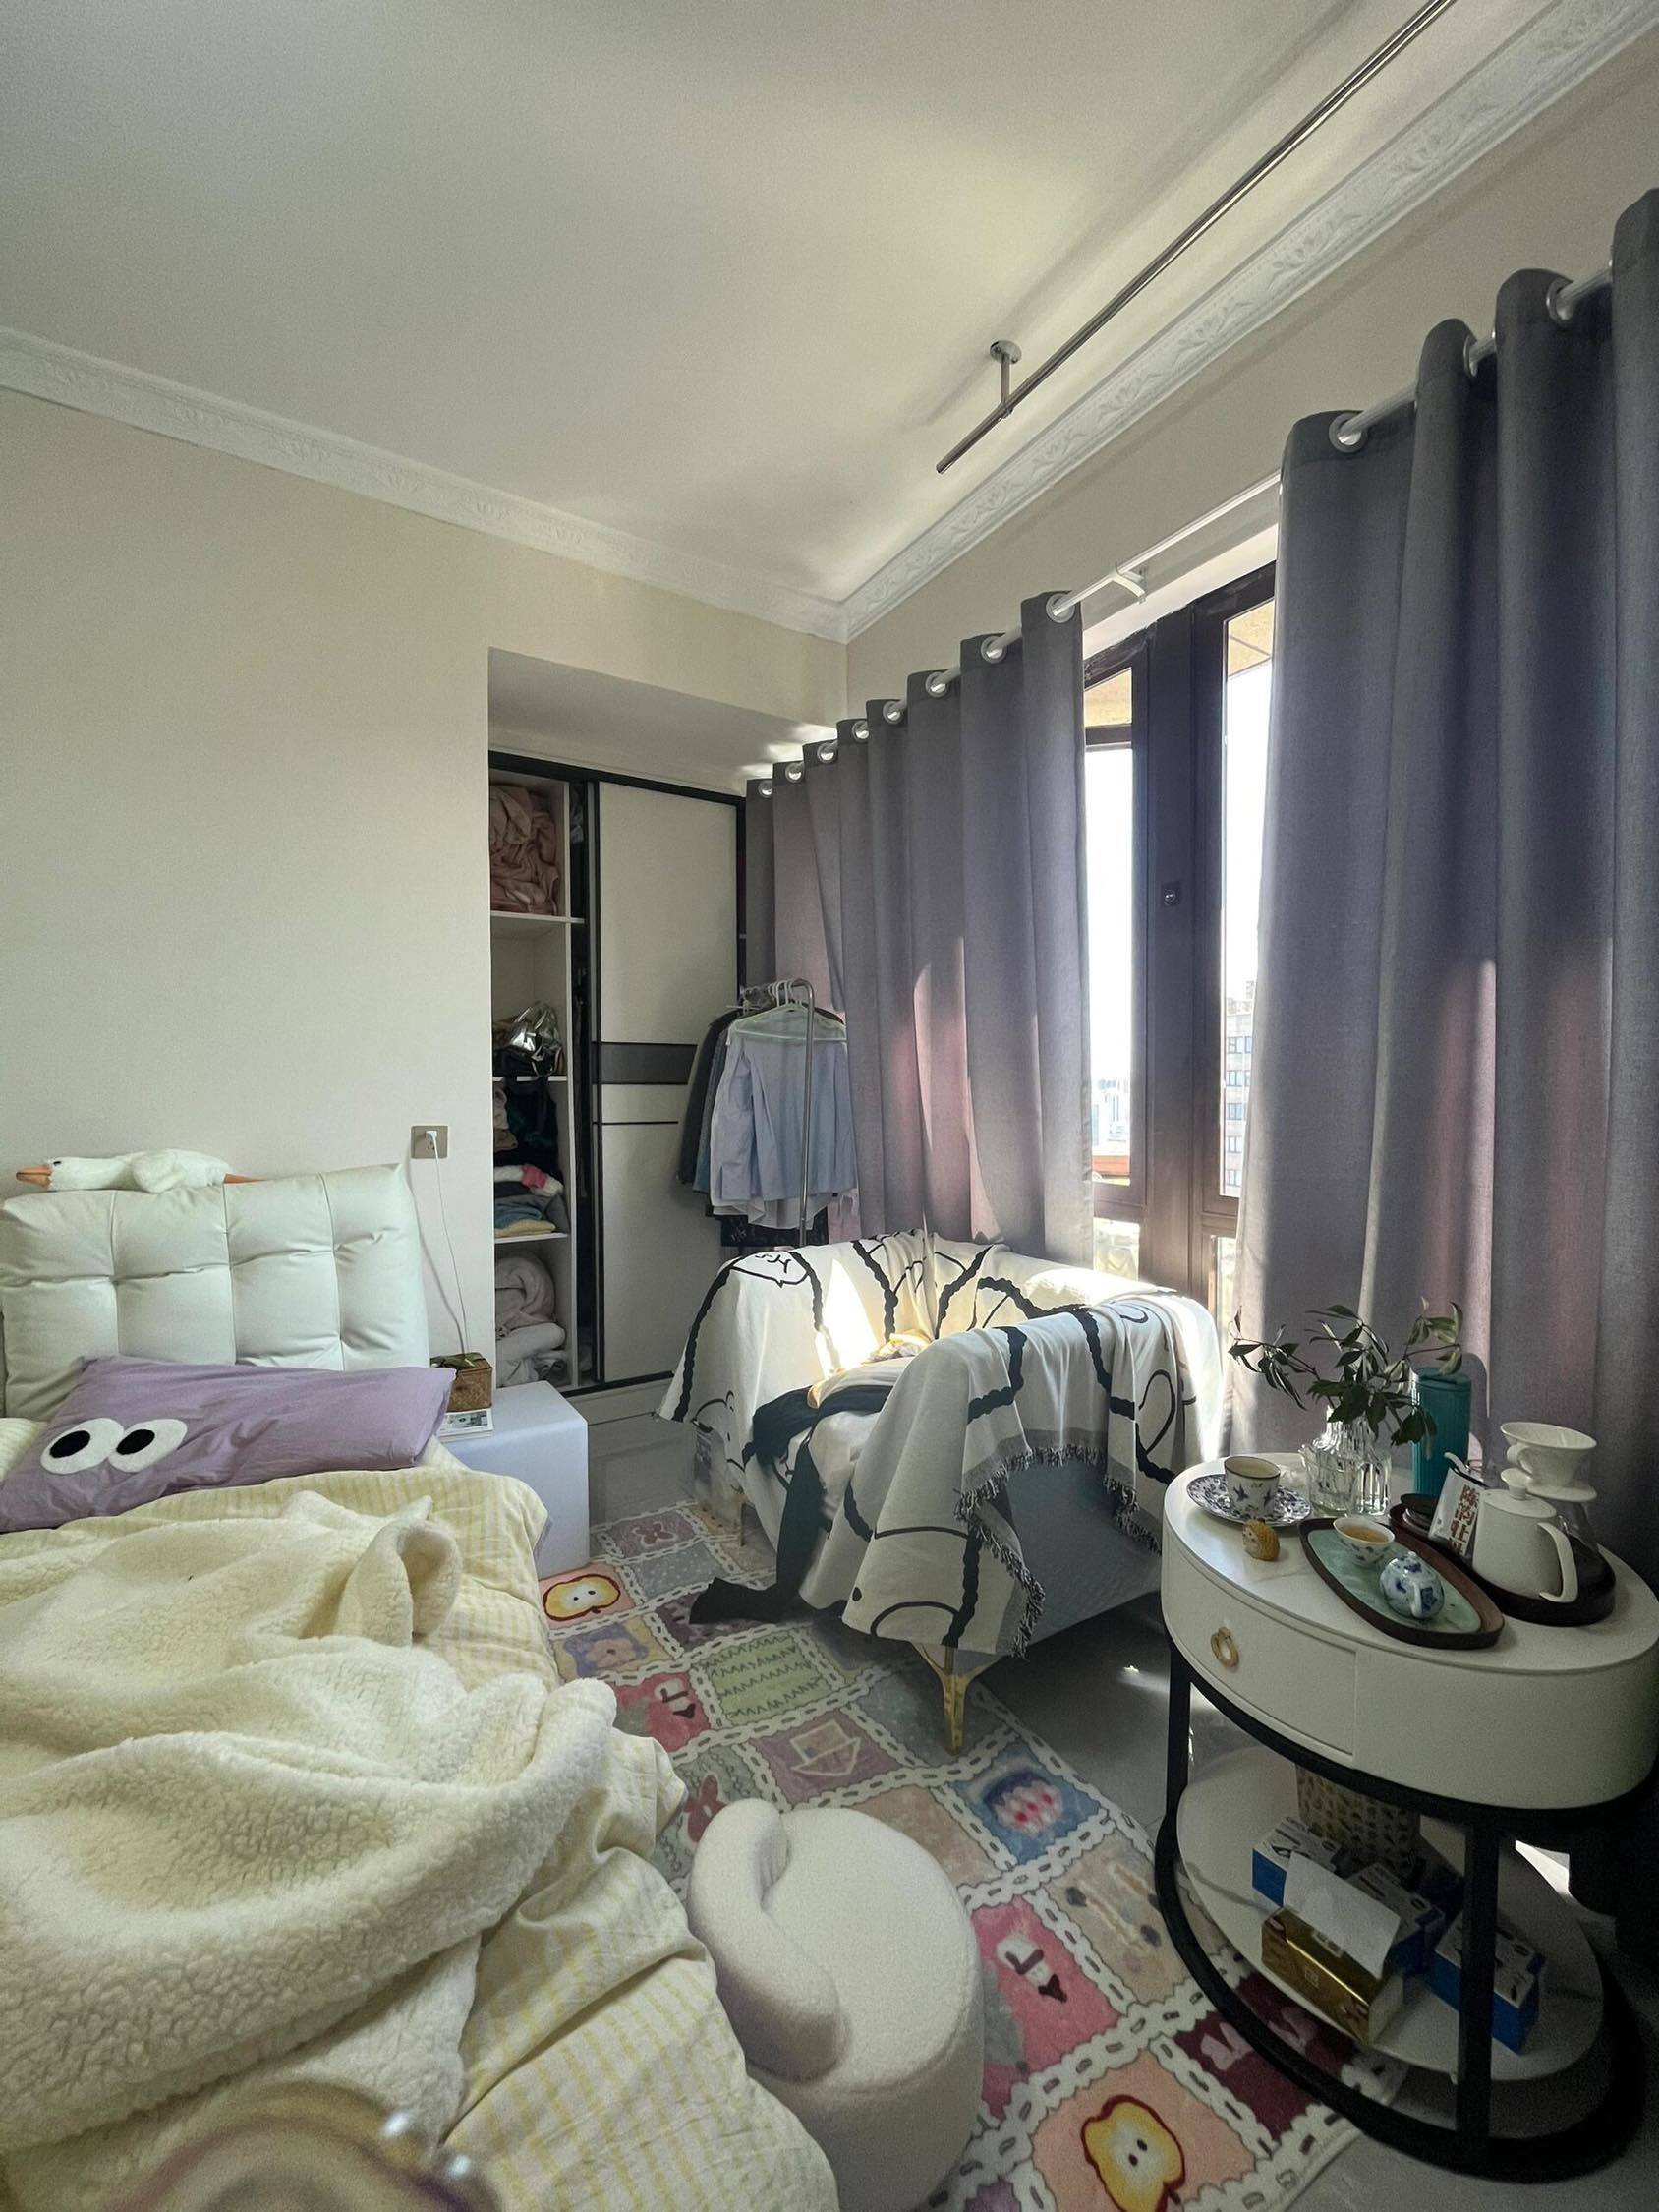 Hangzhou-Xiaoshan-Cozy Home,Clean&Comfy,No Gender Limit,Hustle & Bustle,“Friends”,Chilled,LGBTQ Friendly